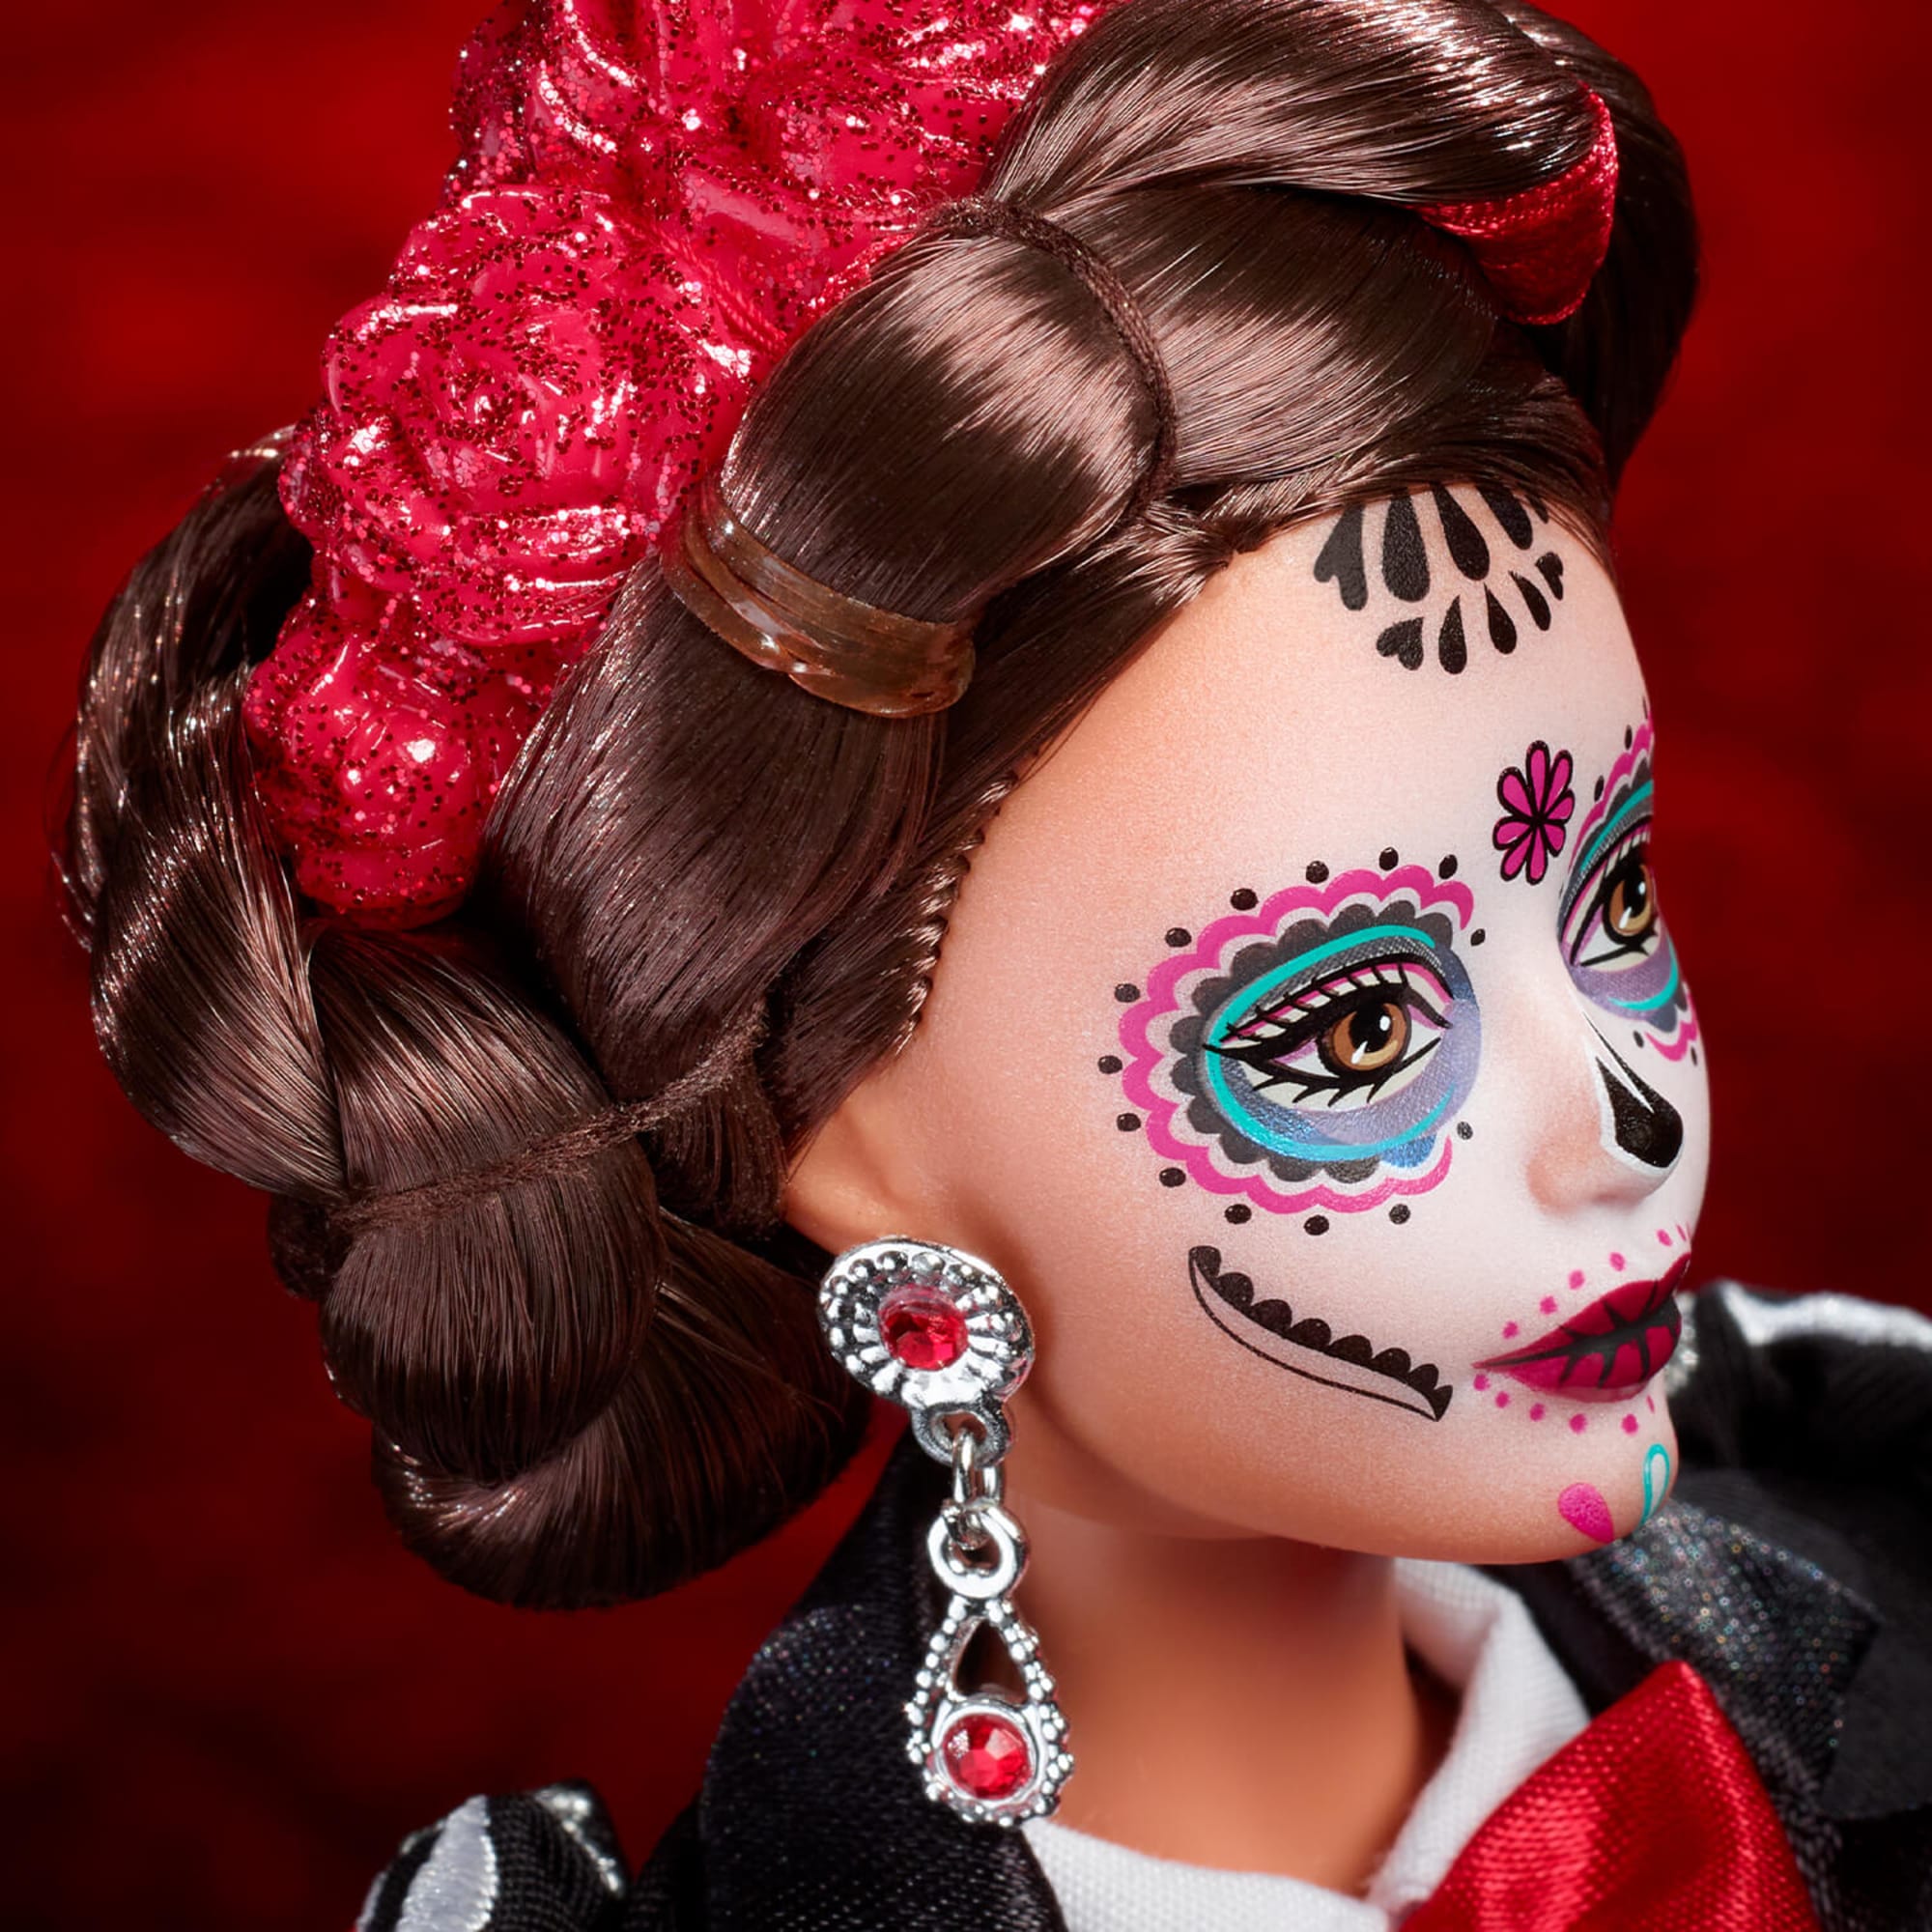 Barbie® Dia De Muertos Doll by Mattel